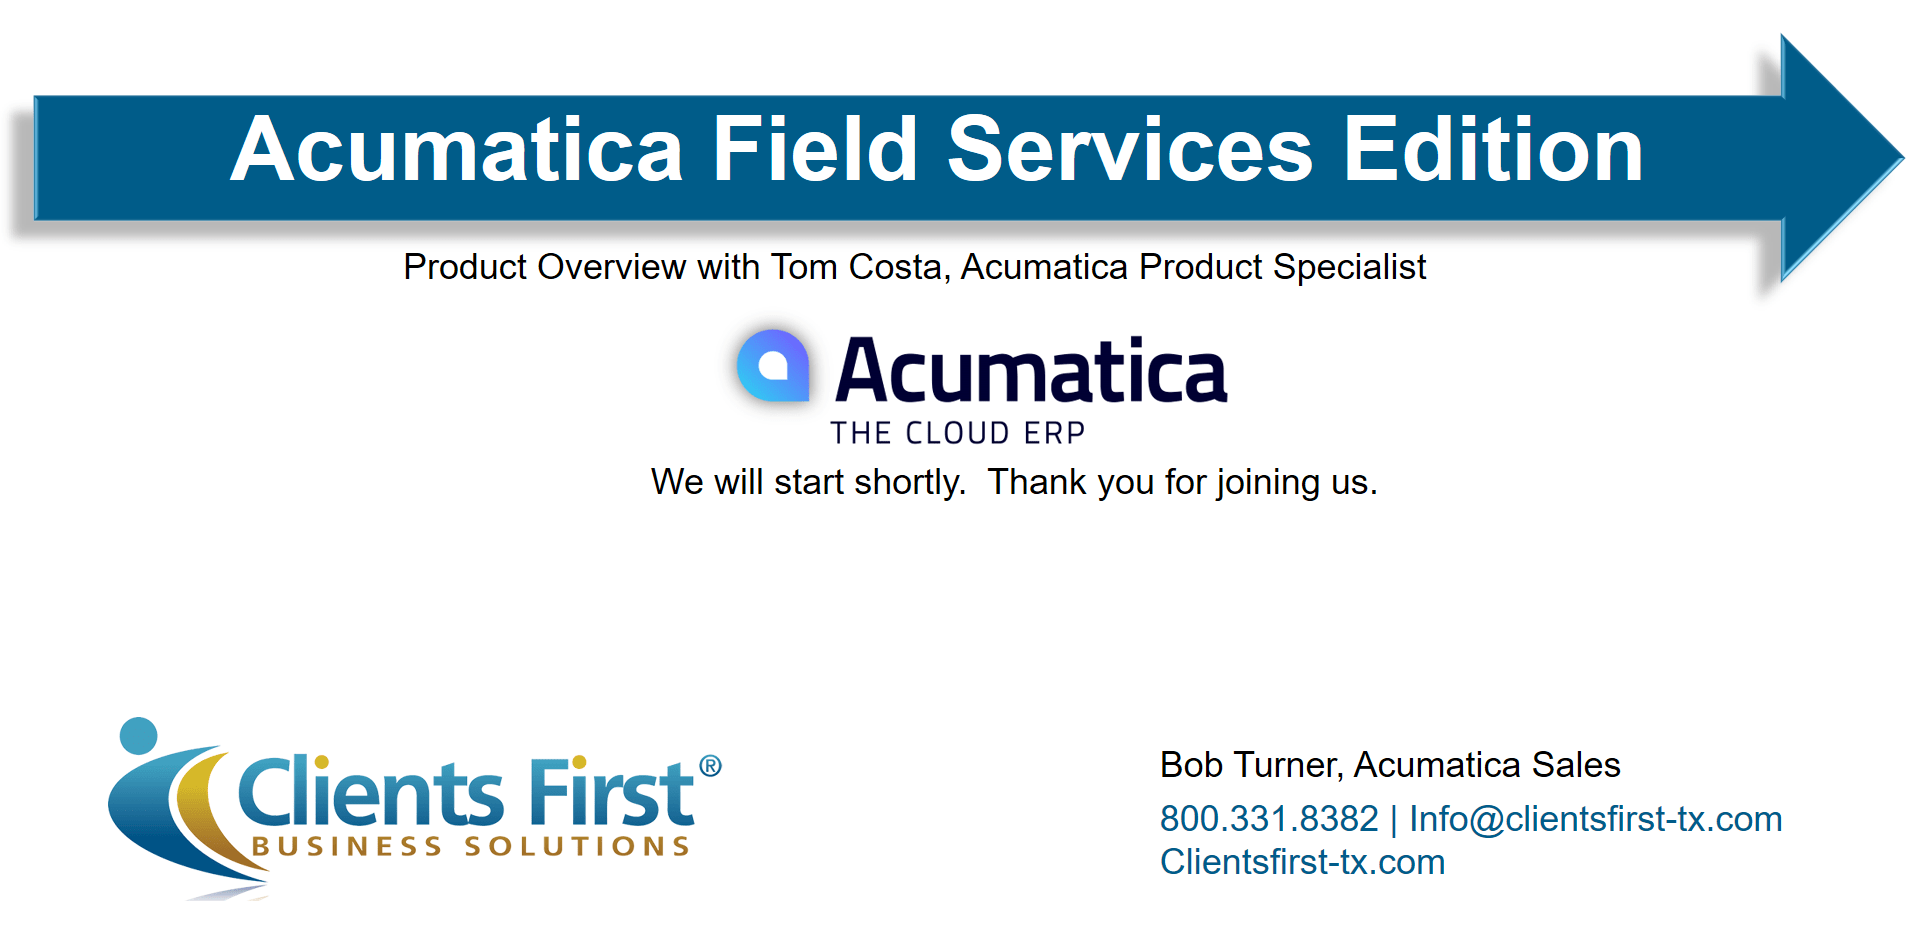 Acumatica Field Services